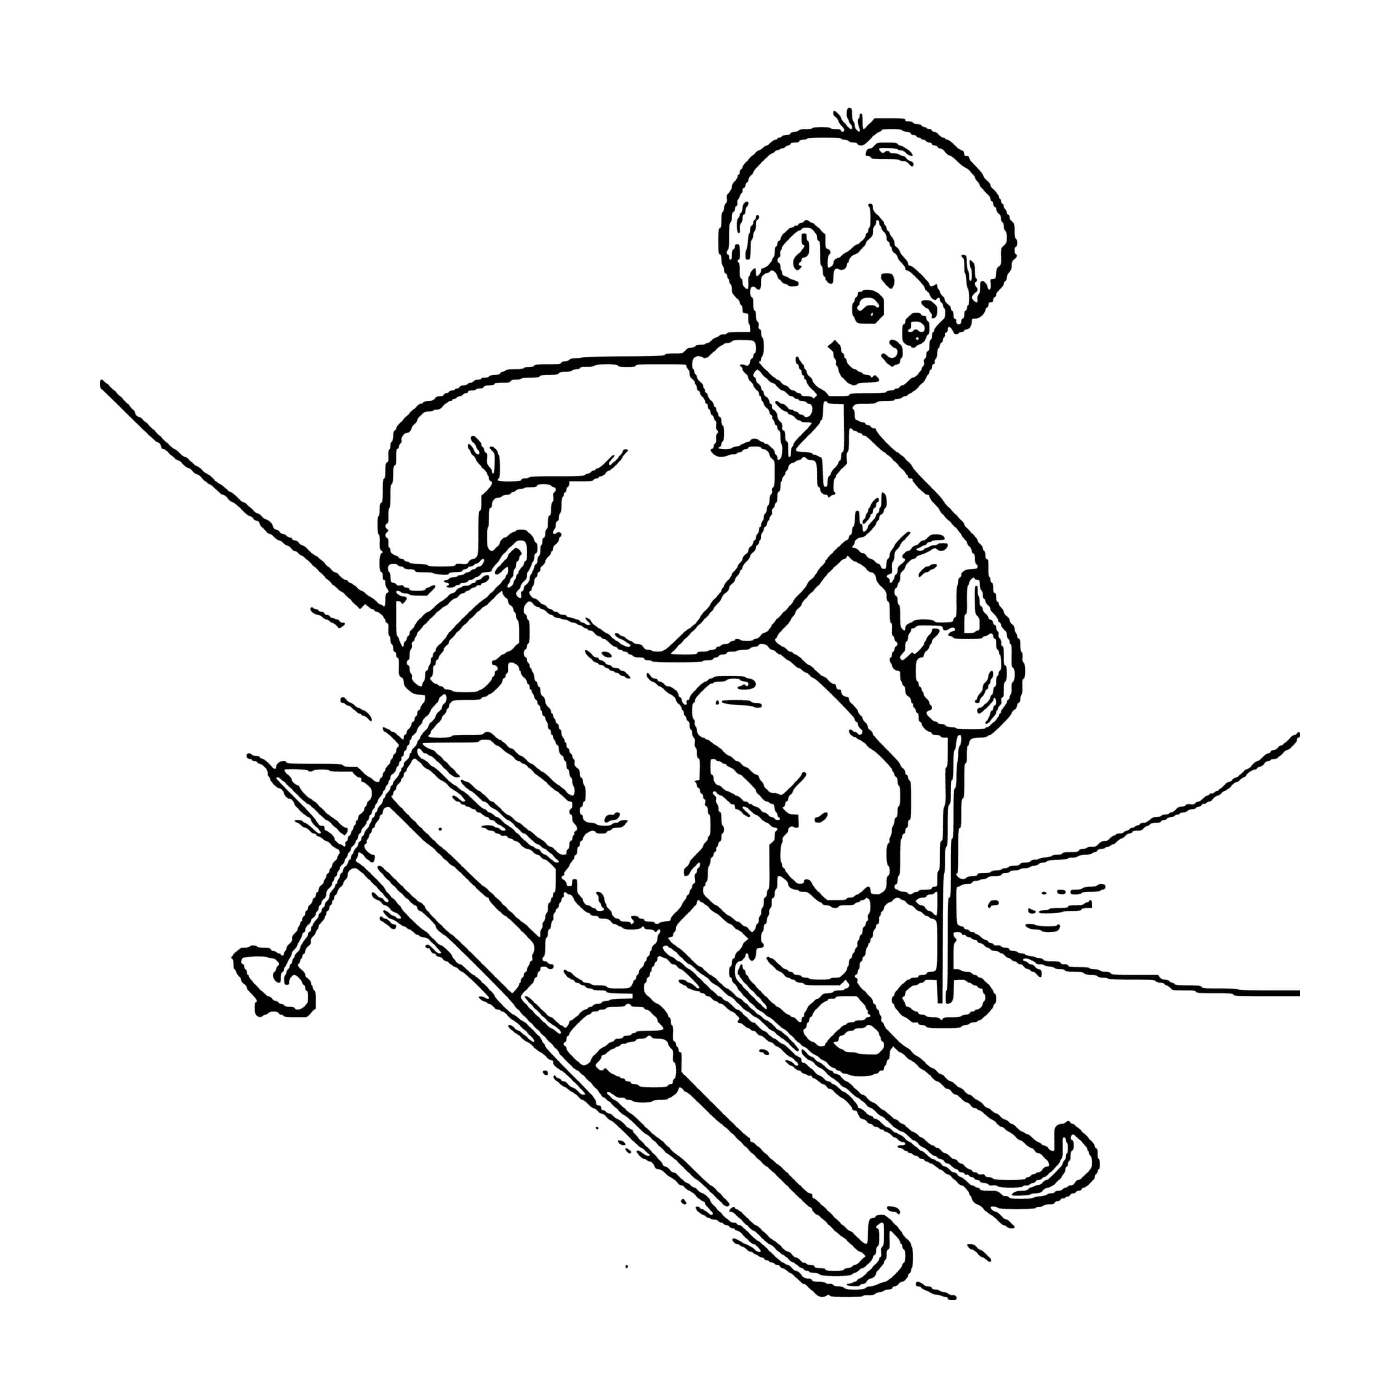   Enfant apprend ski enthousiaste 